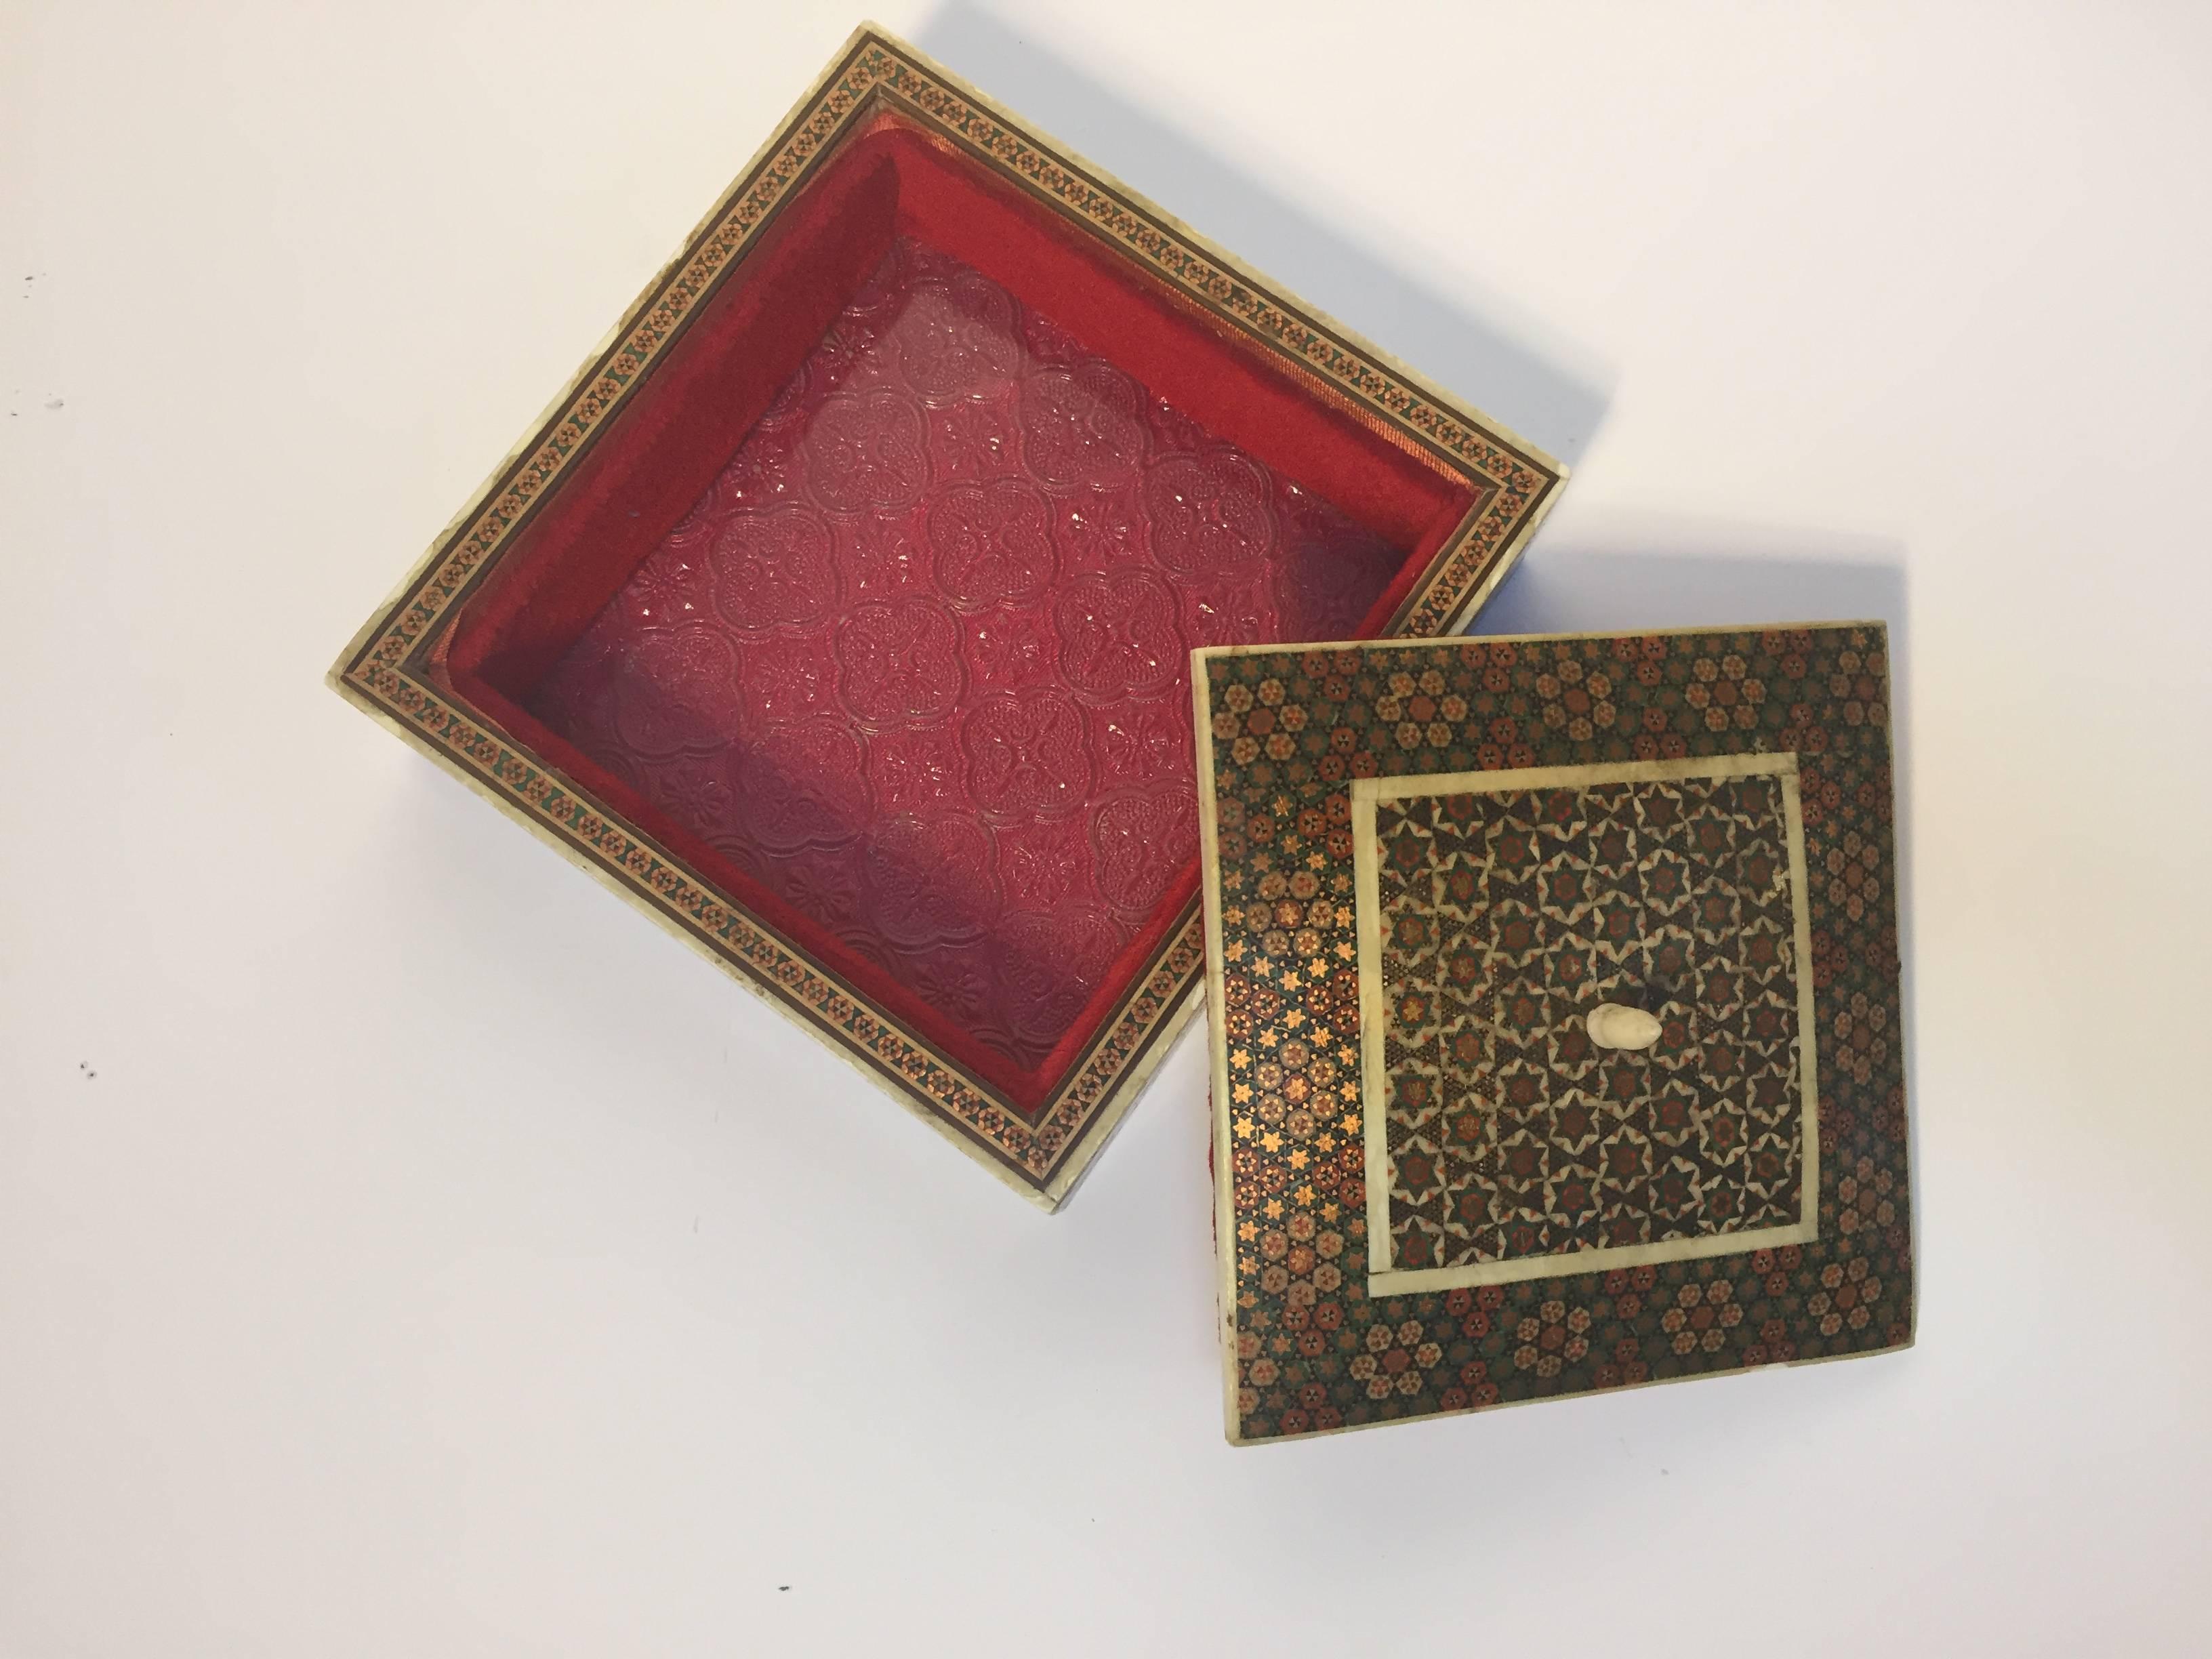 20th Century Anglo-Indian Decorative Micro Mosaic Inlaid Box